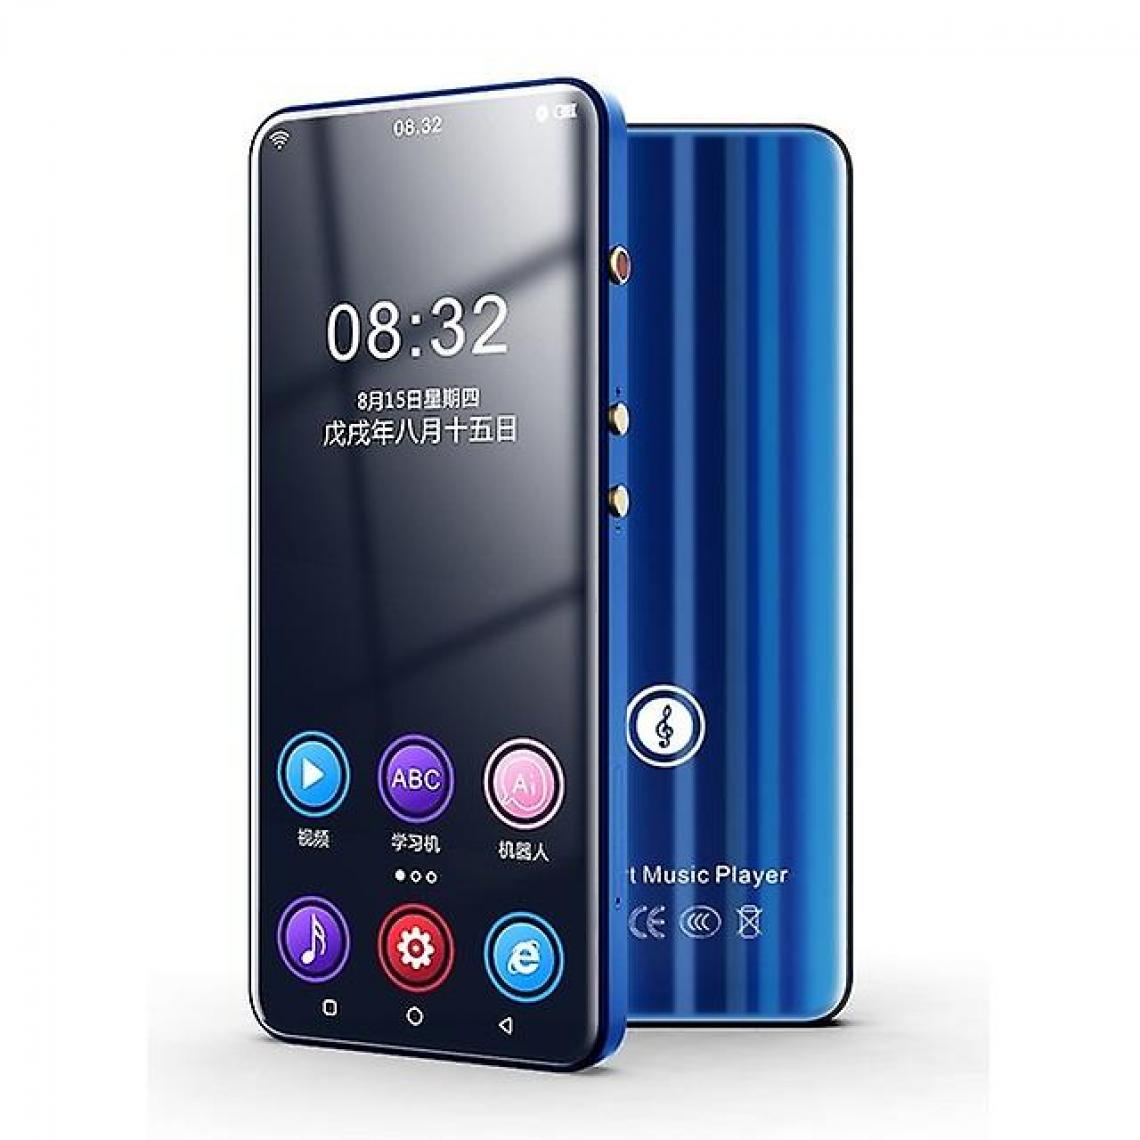 Universal - Wifi Android Bluetooth 5.0 avec FM, e-book, magnétoscope (bleu) - Radio, lecteur CD/MP3 enfant